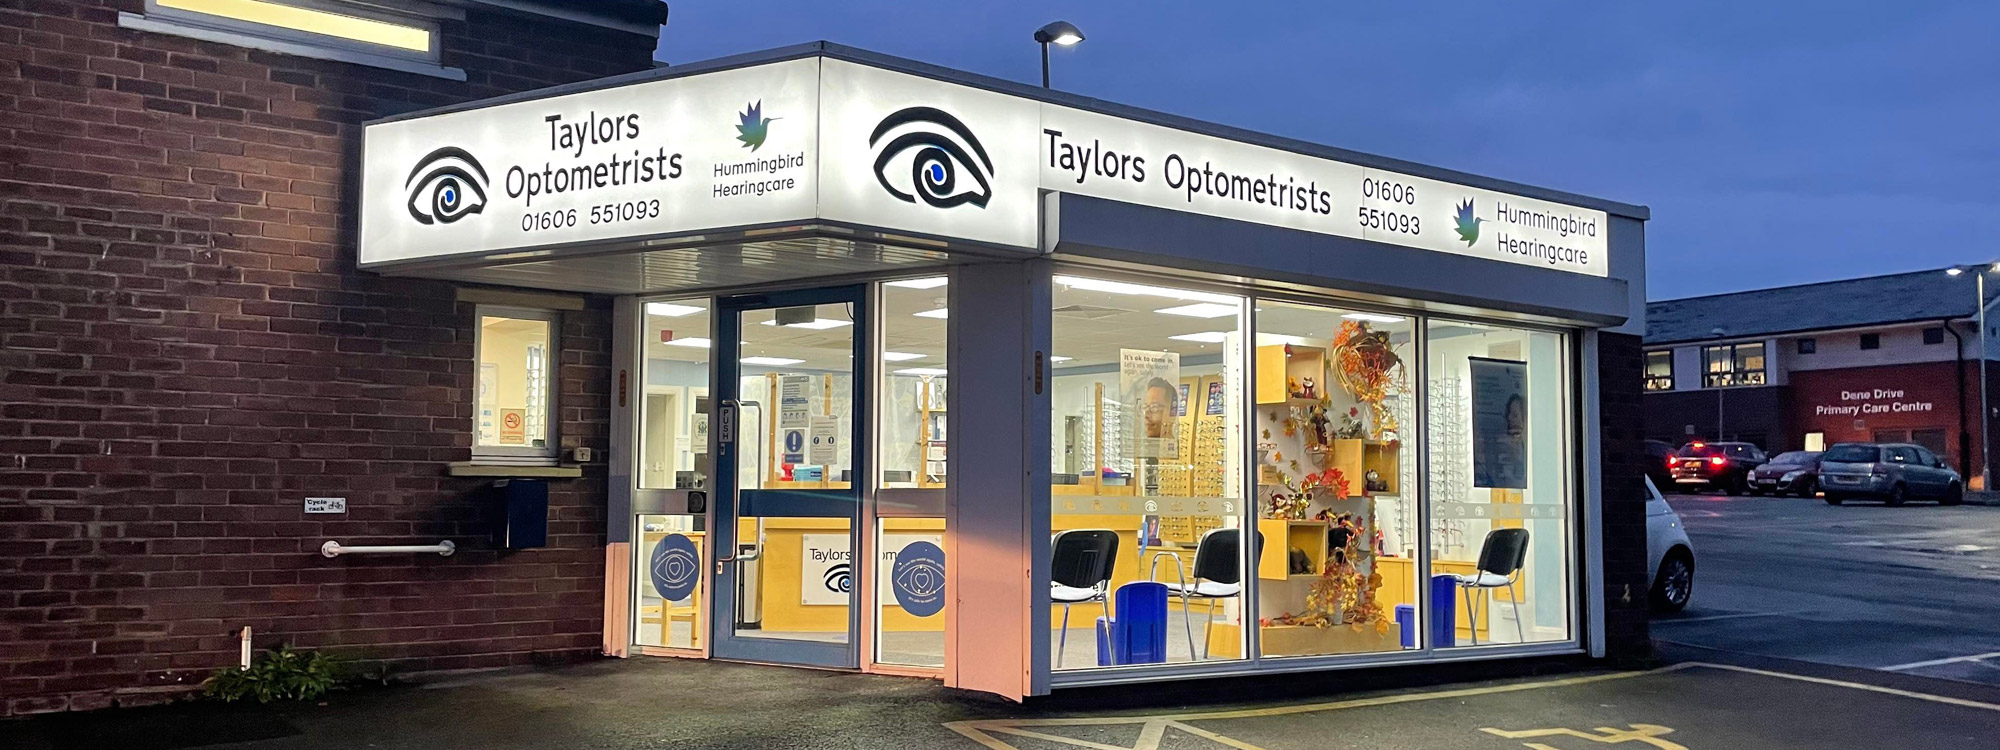 Taylor's Optometrists: Banner Image